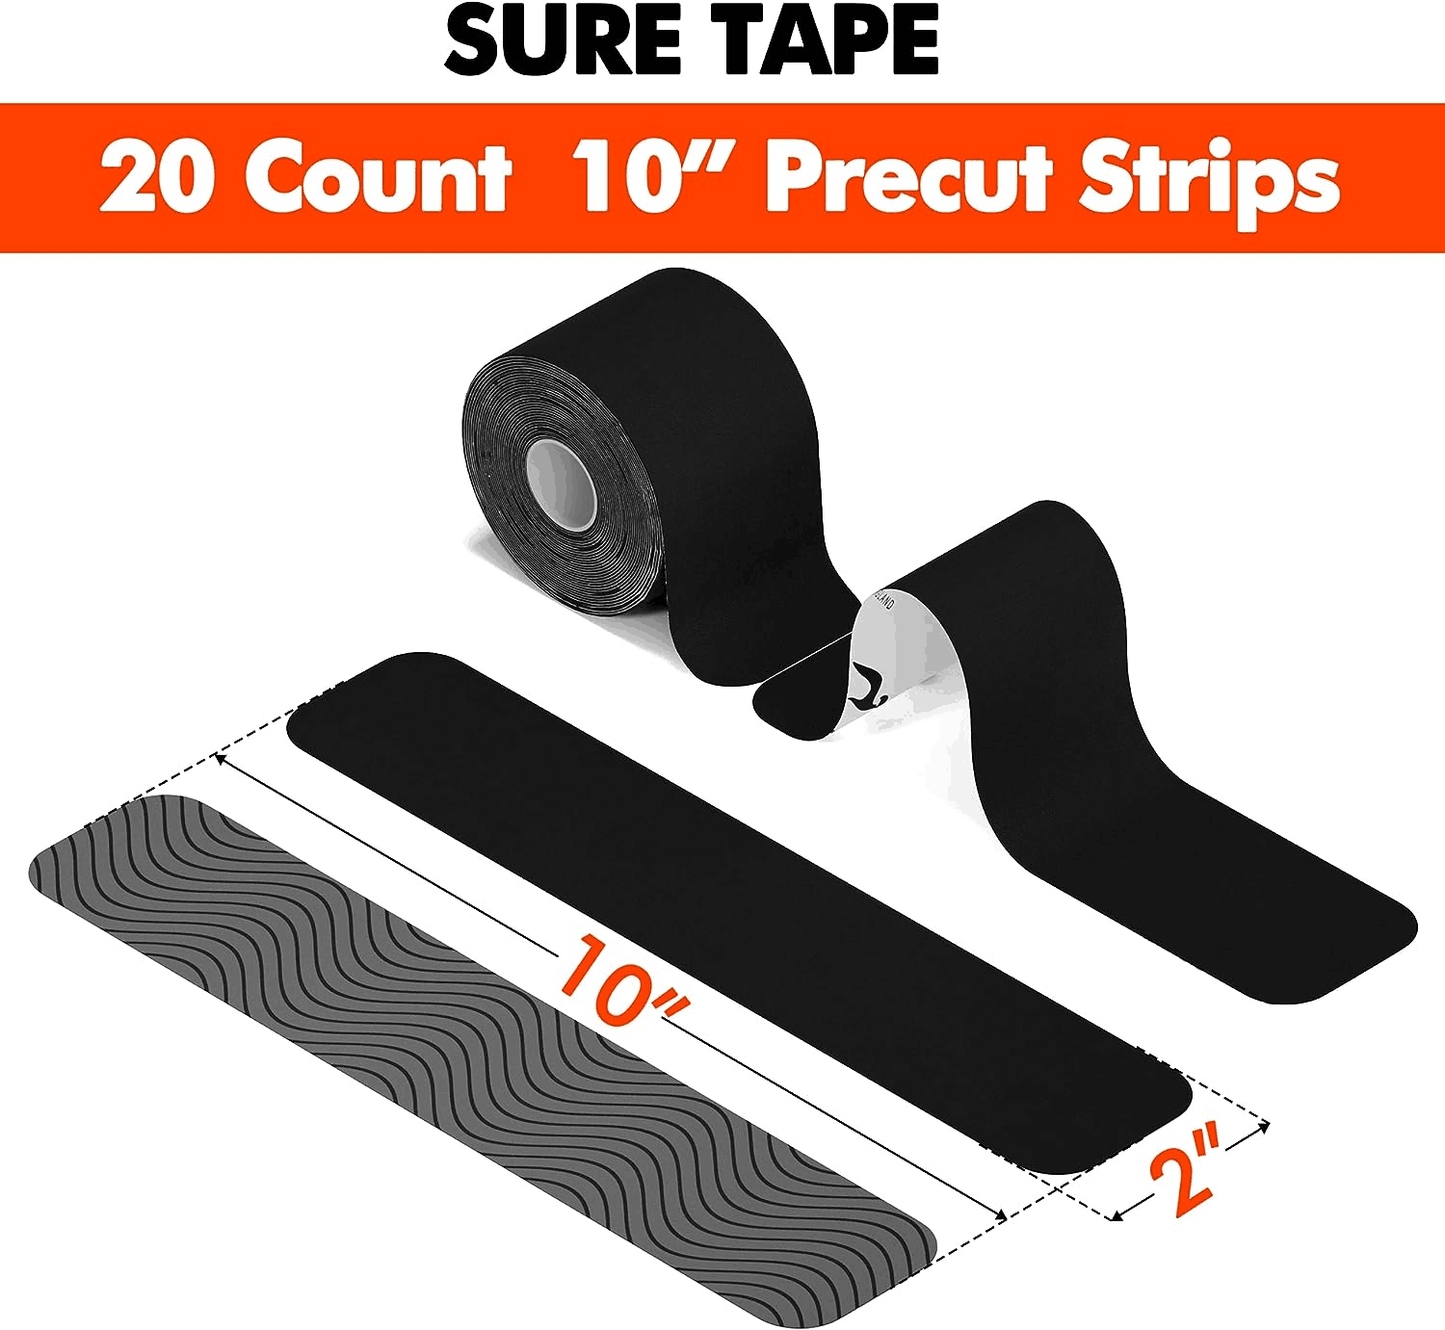 Sure Tape Black Athletic Tape Original Cotton Elastic Kinesiology Tape Roll